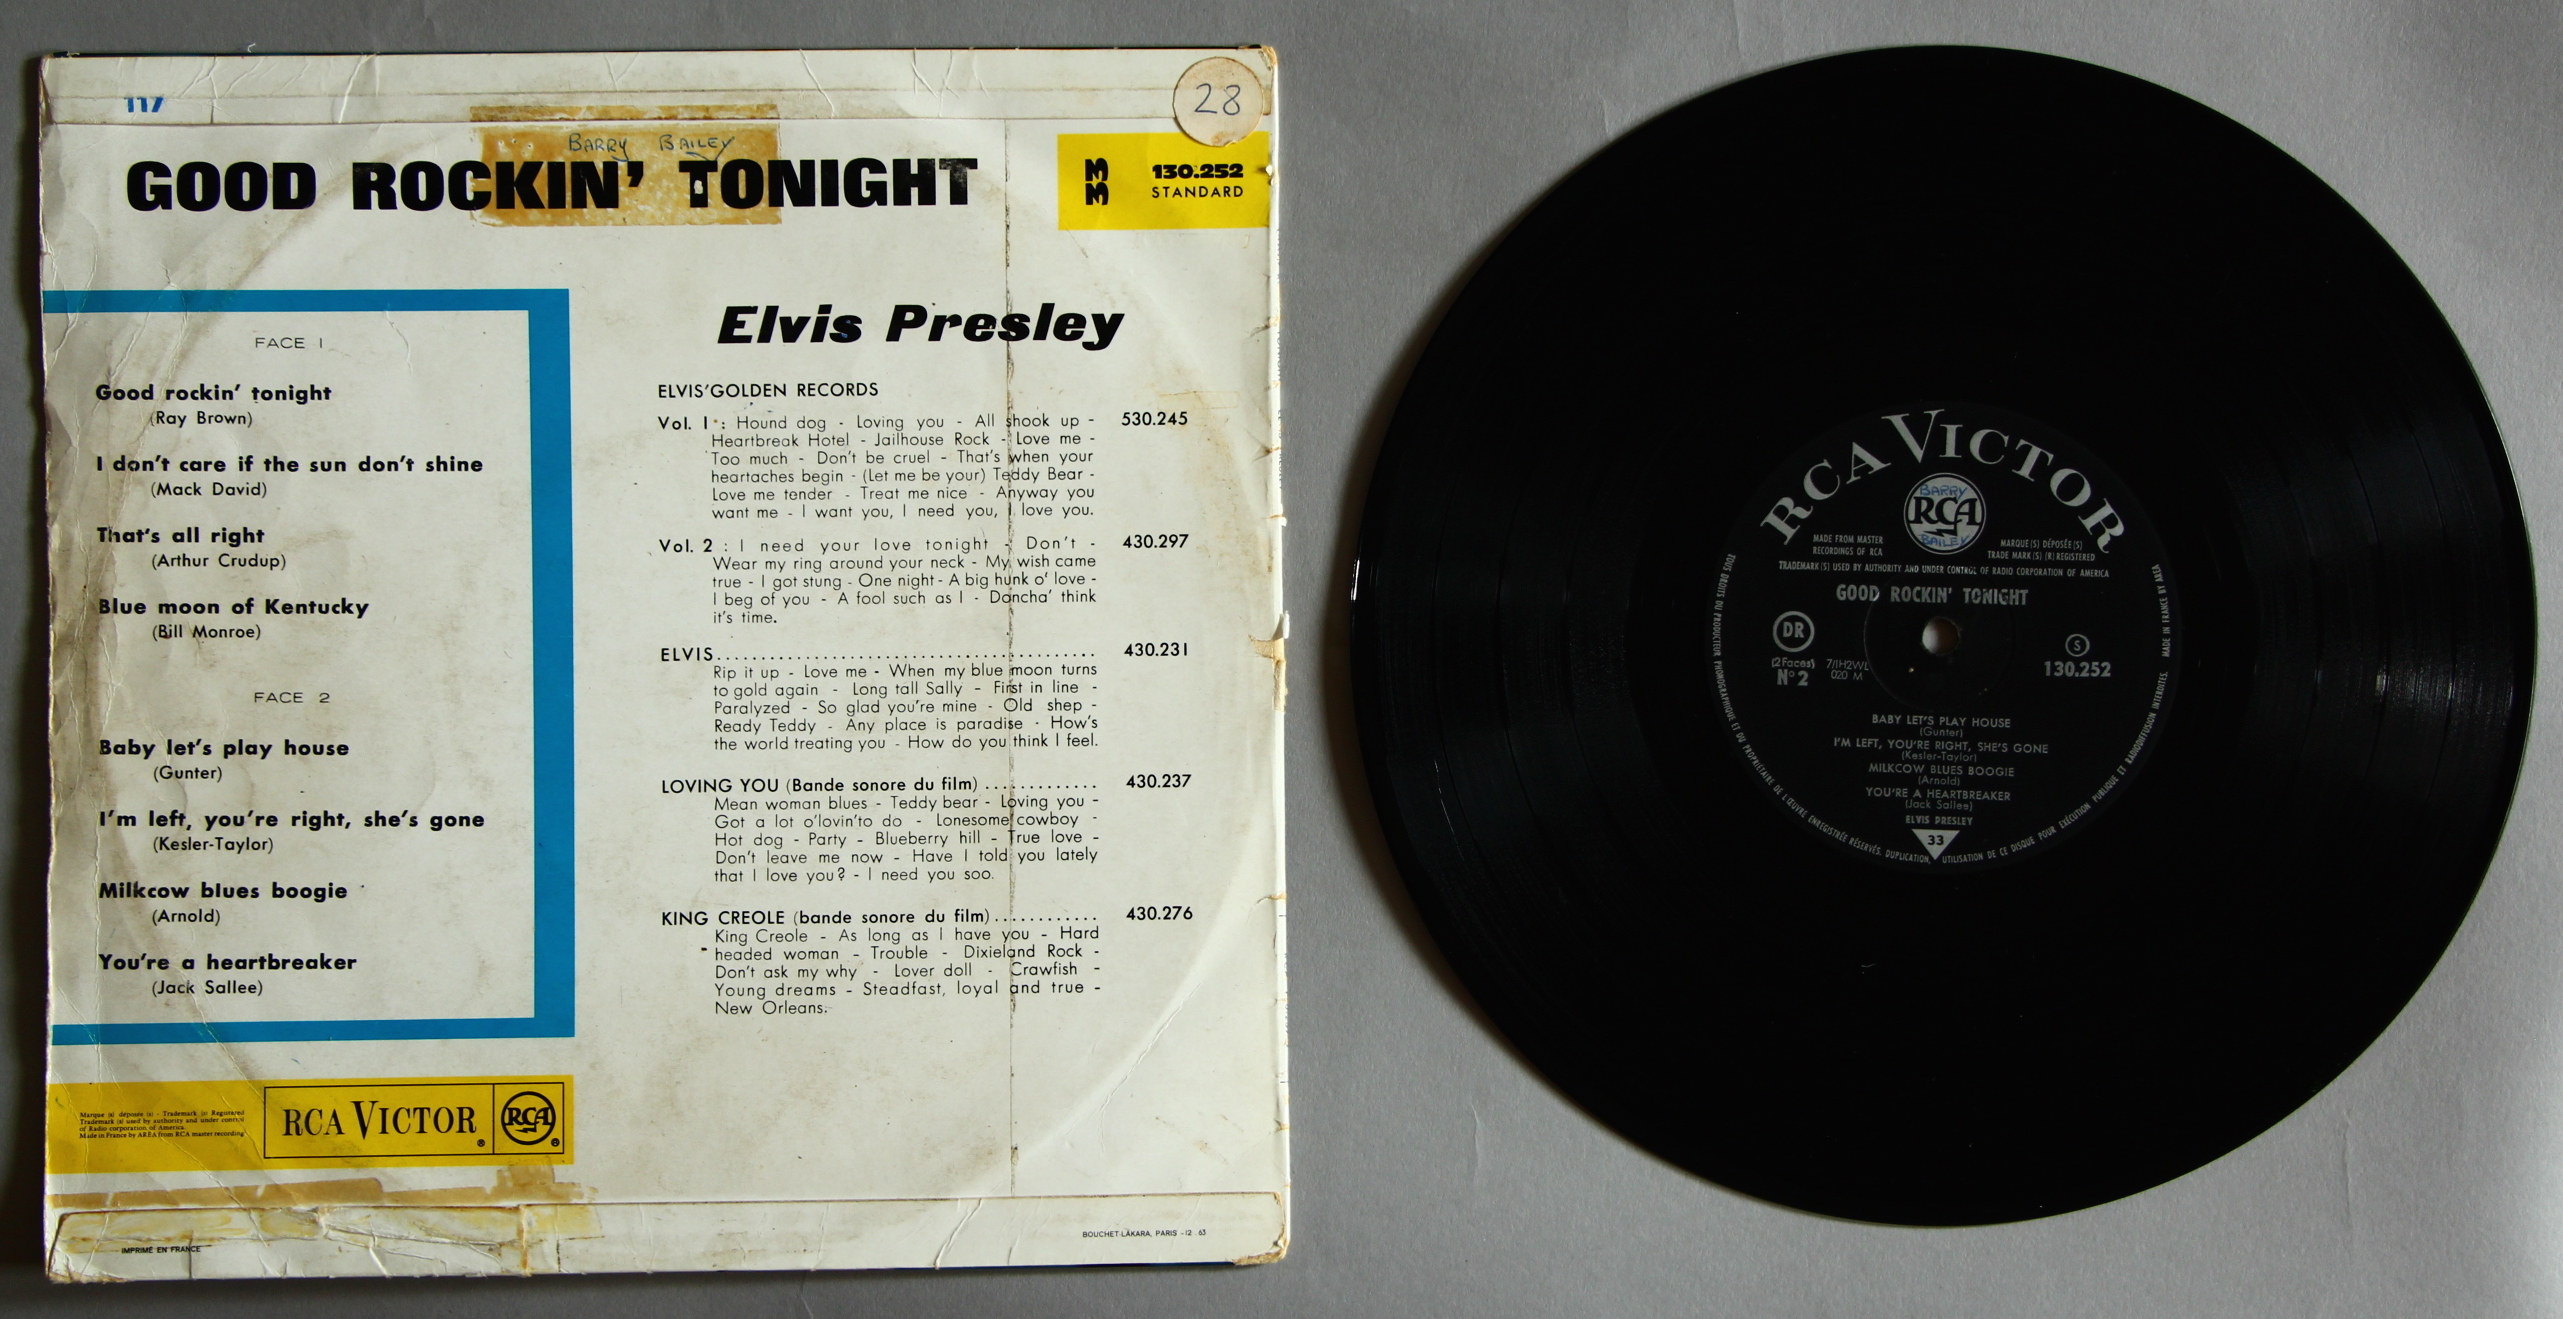 Elvis Presley Rare French 10 inch vinyl record "Good Rockin Tonight" original pressing 130.252. - Image 2 of 6